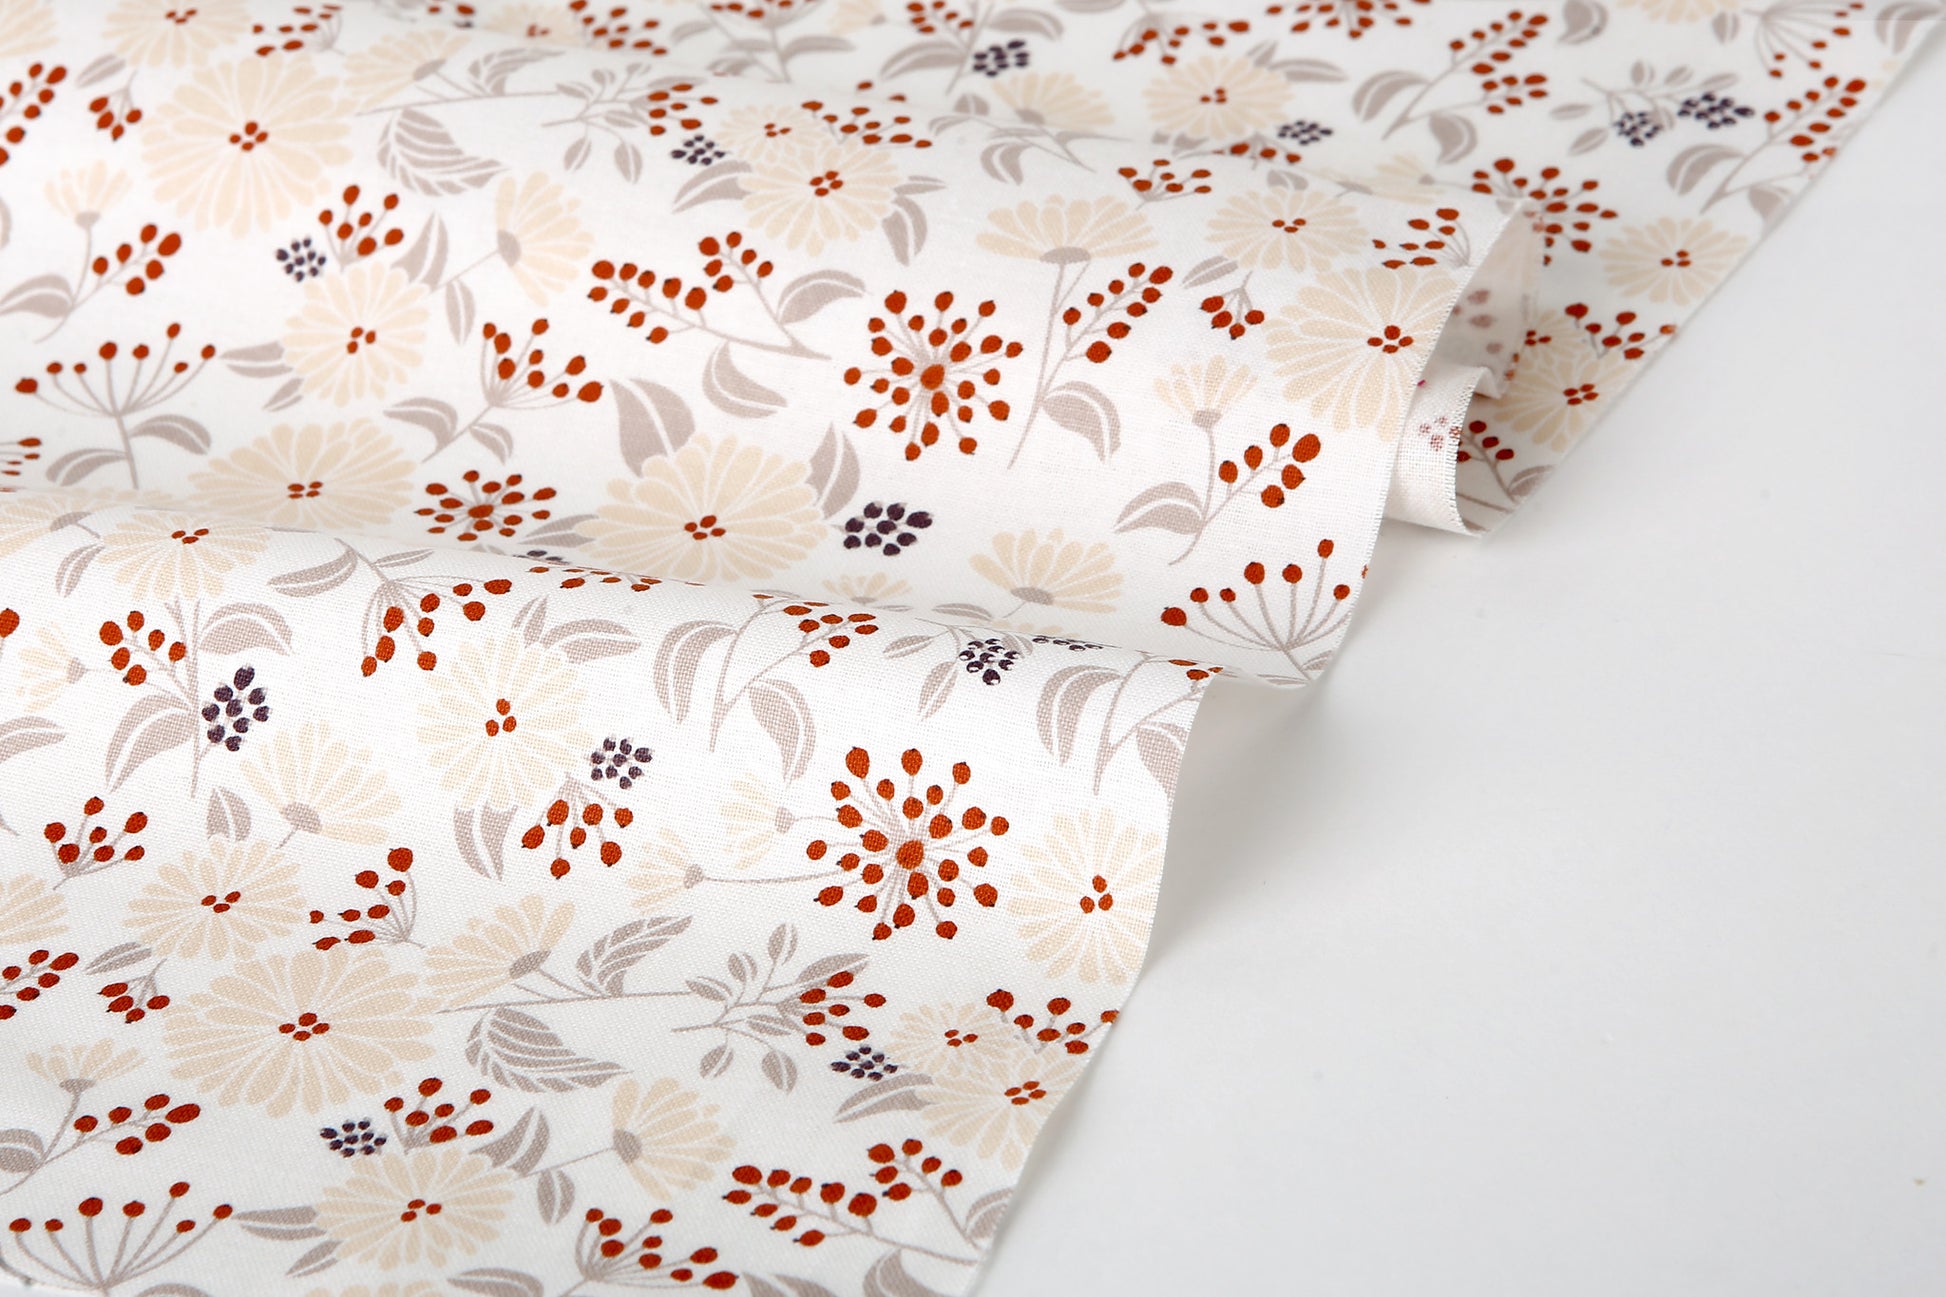 Quarter Fabric Pack - Cotton, Dailylike "Tree Fruit" - KEY Handmade
 - 5